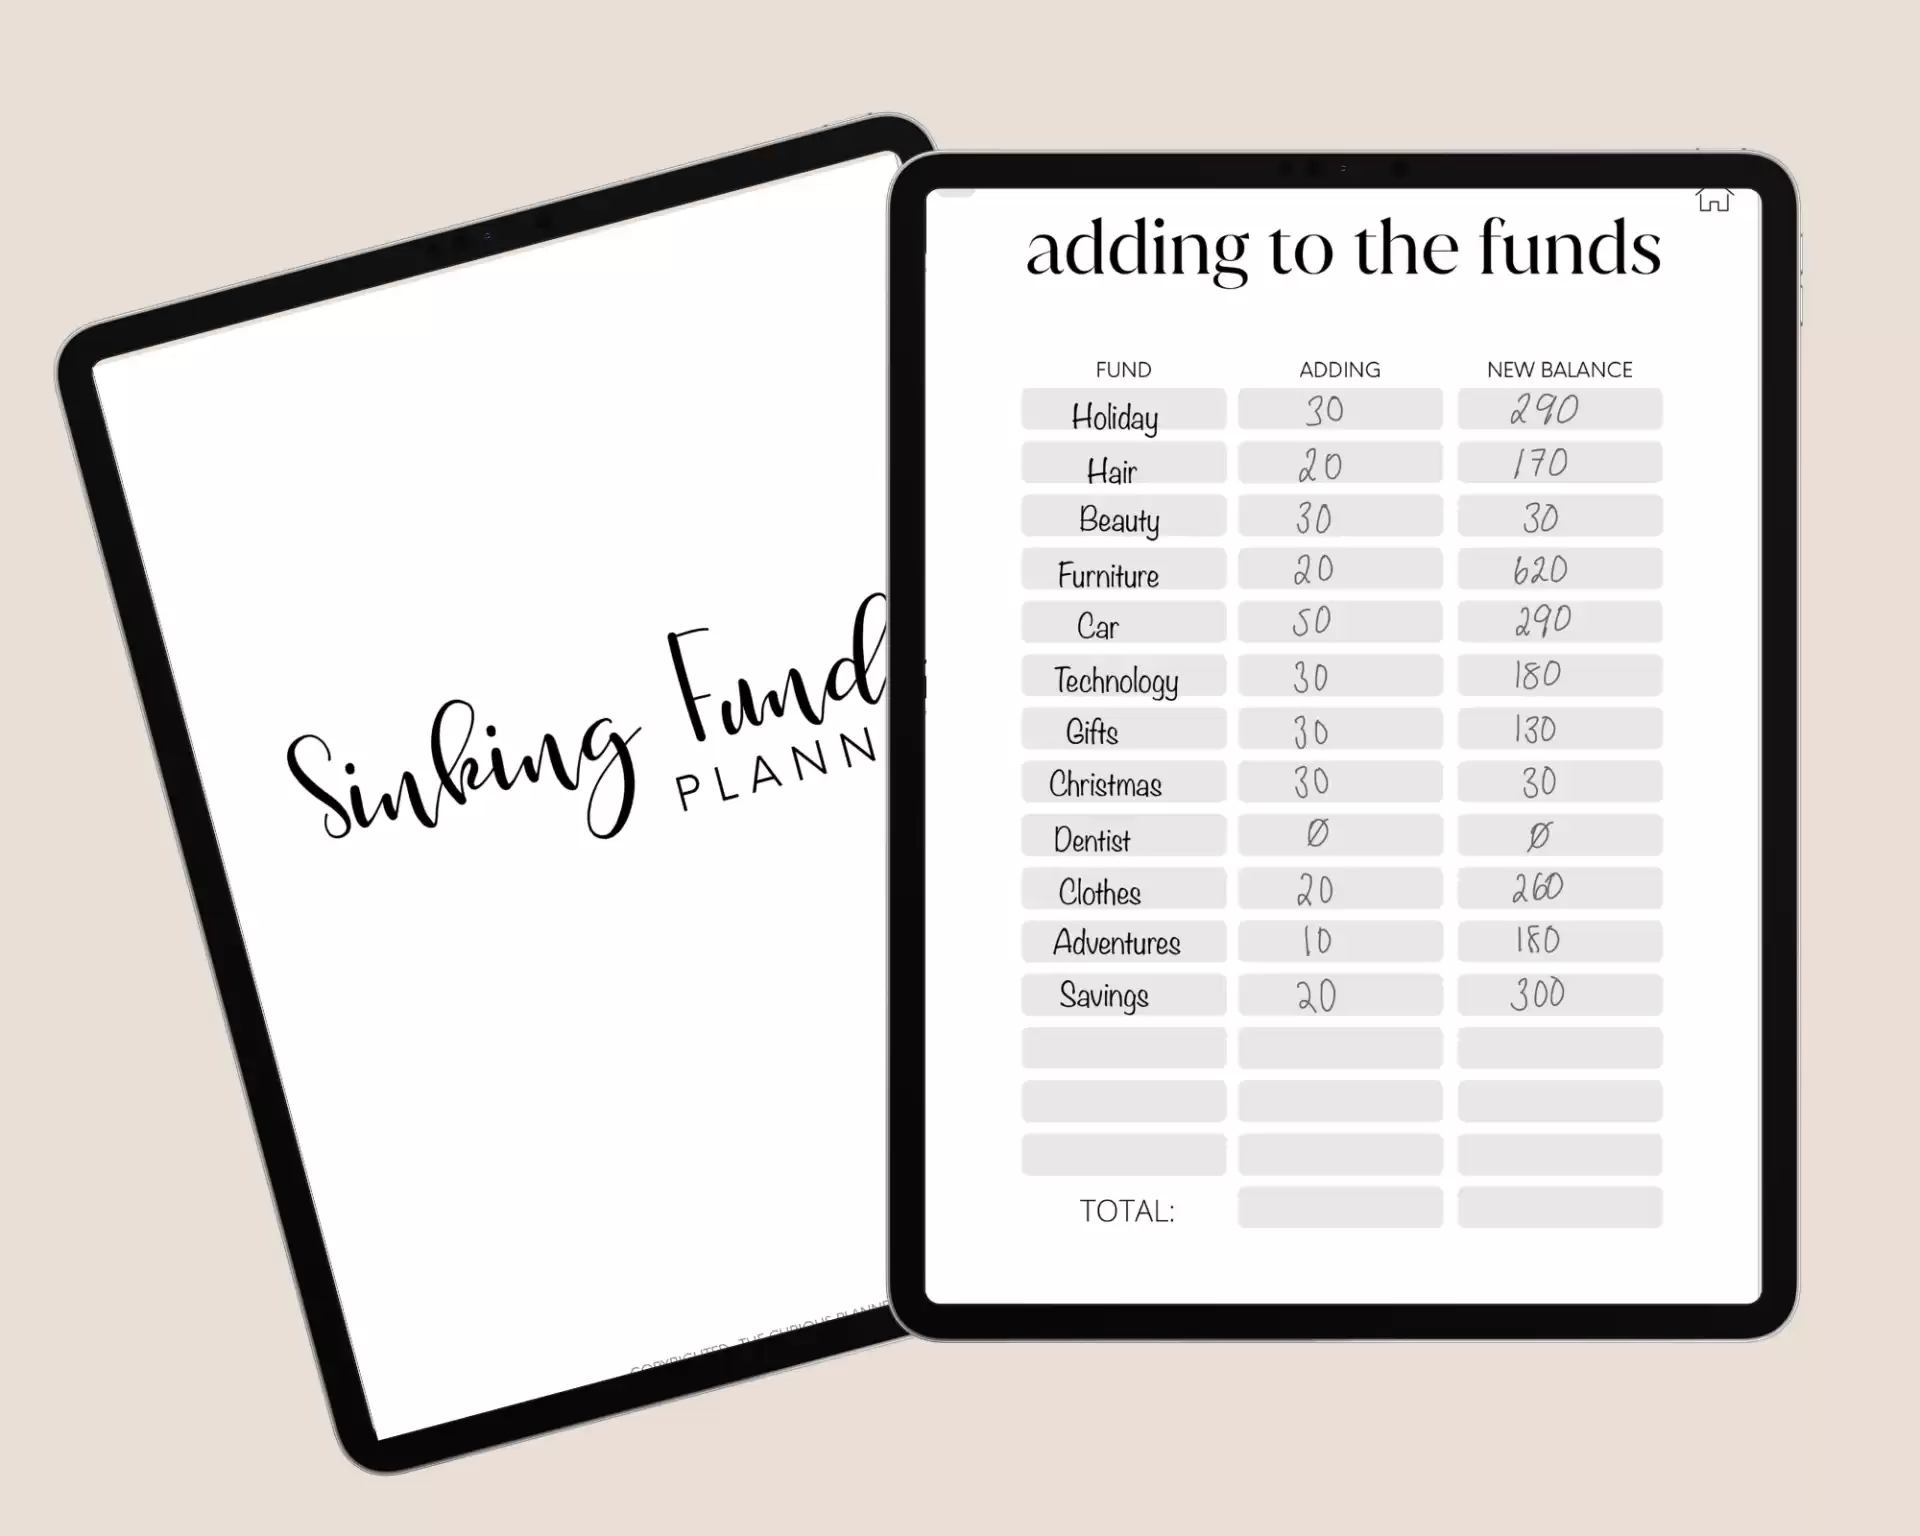 Digital Sinking Funds Planner - The Number 1 Ultimate Savings Planner